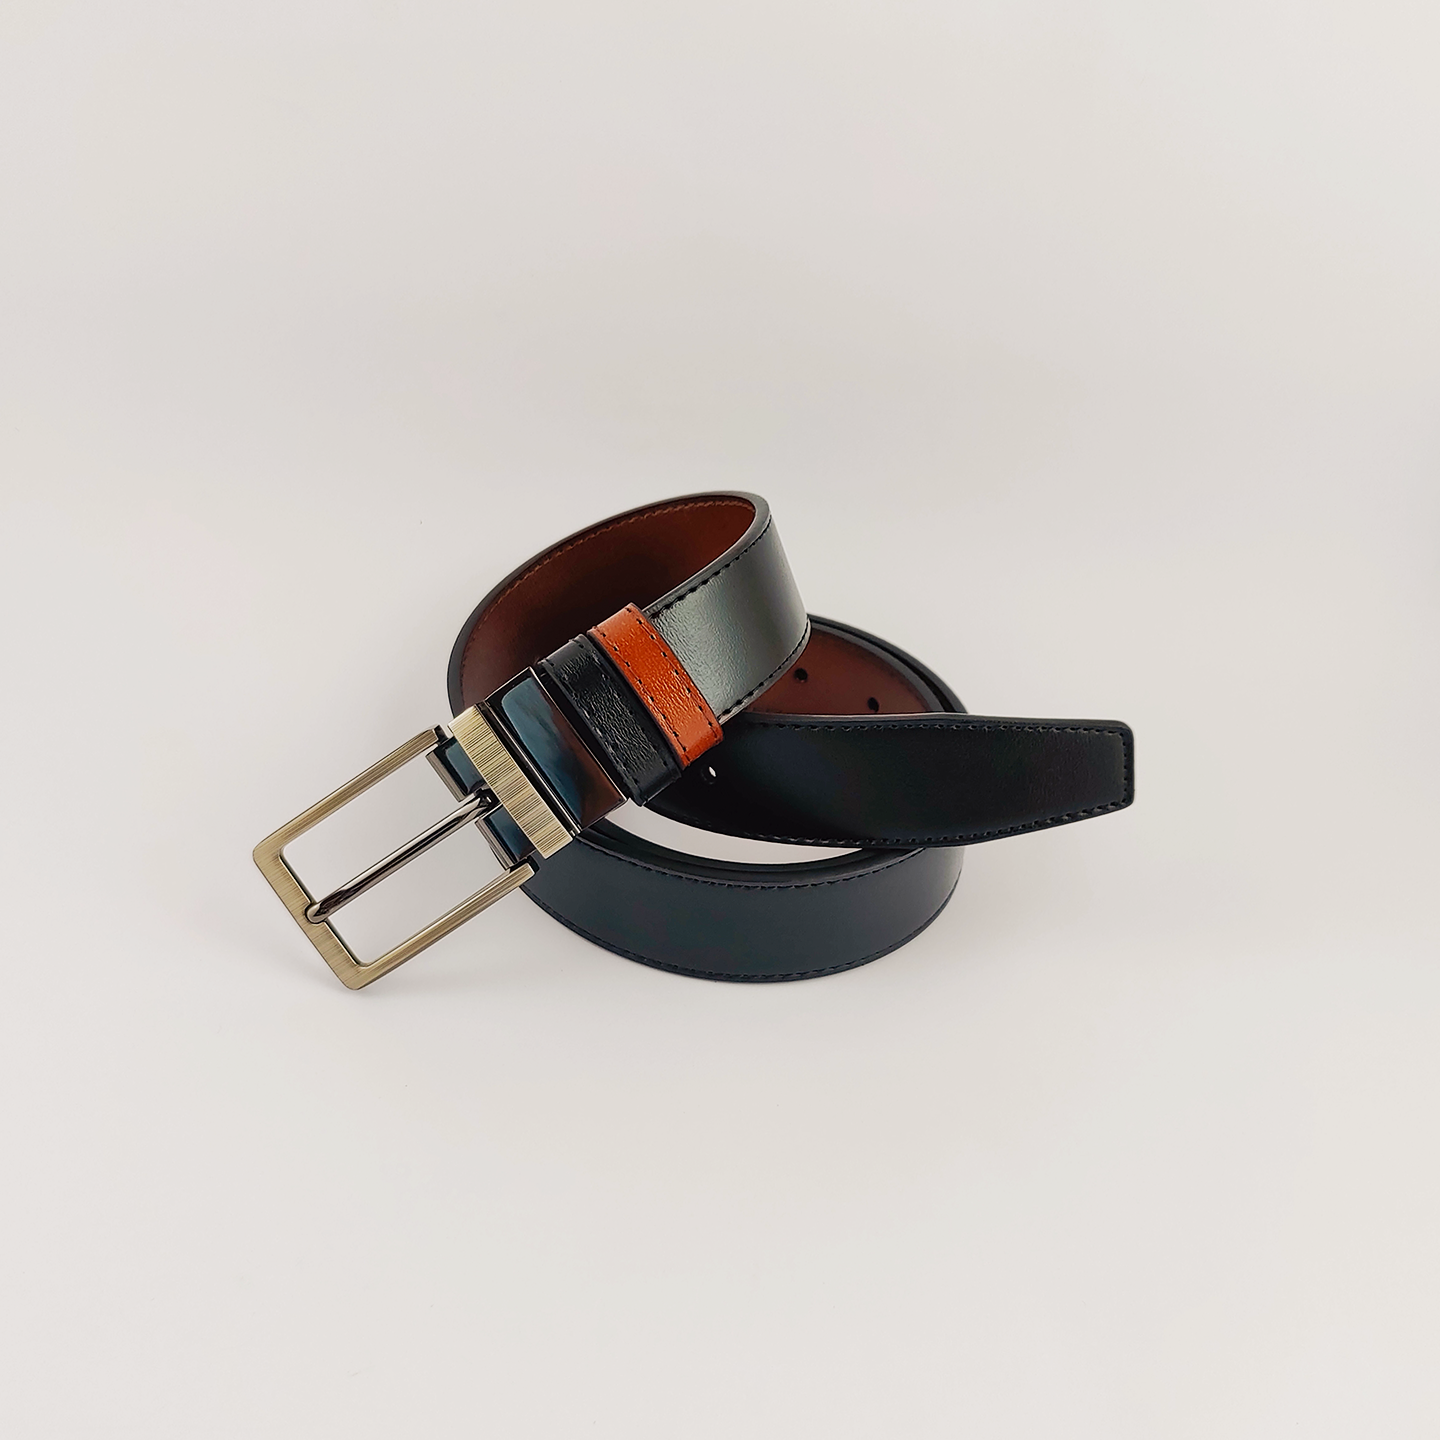 Premium black & dark brown leather formal reversible belt